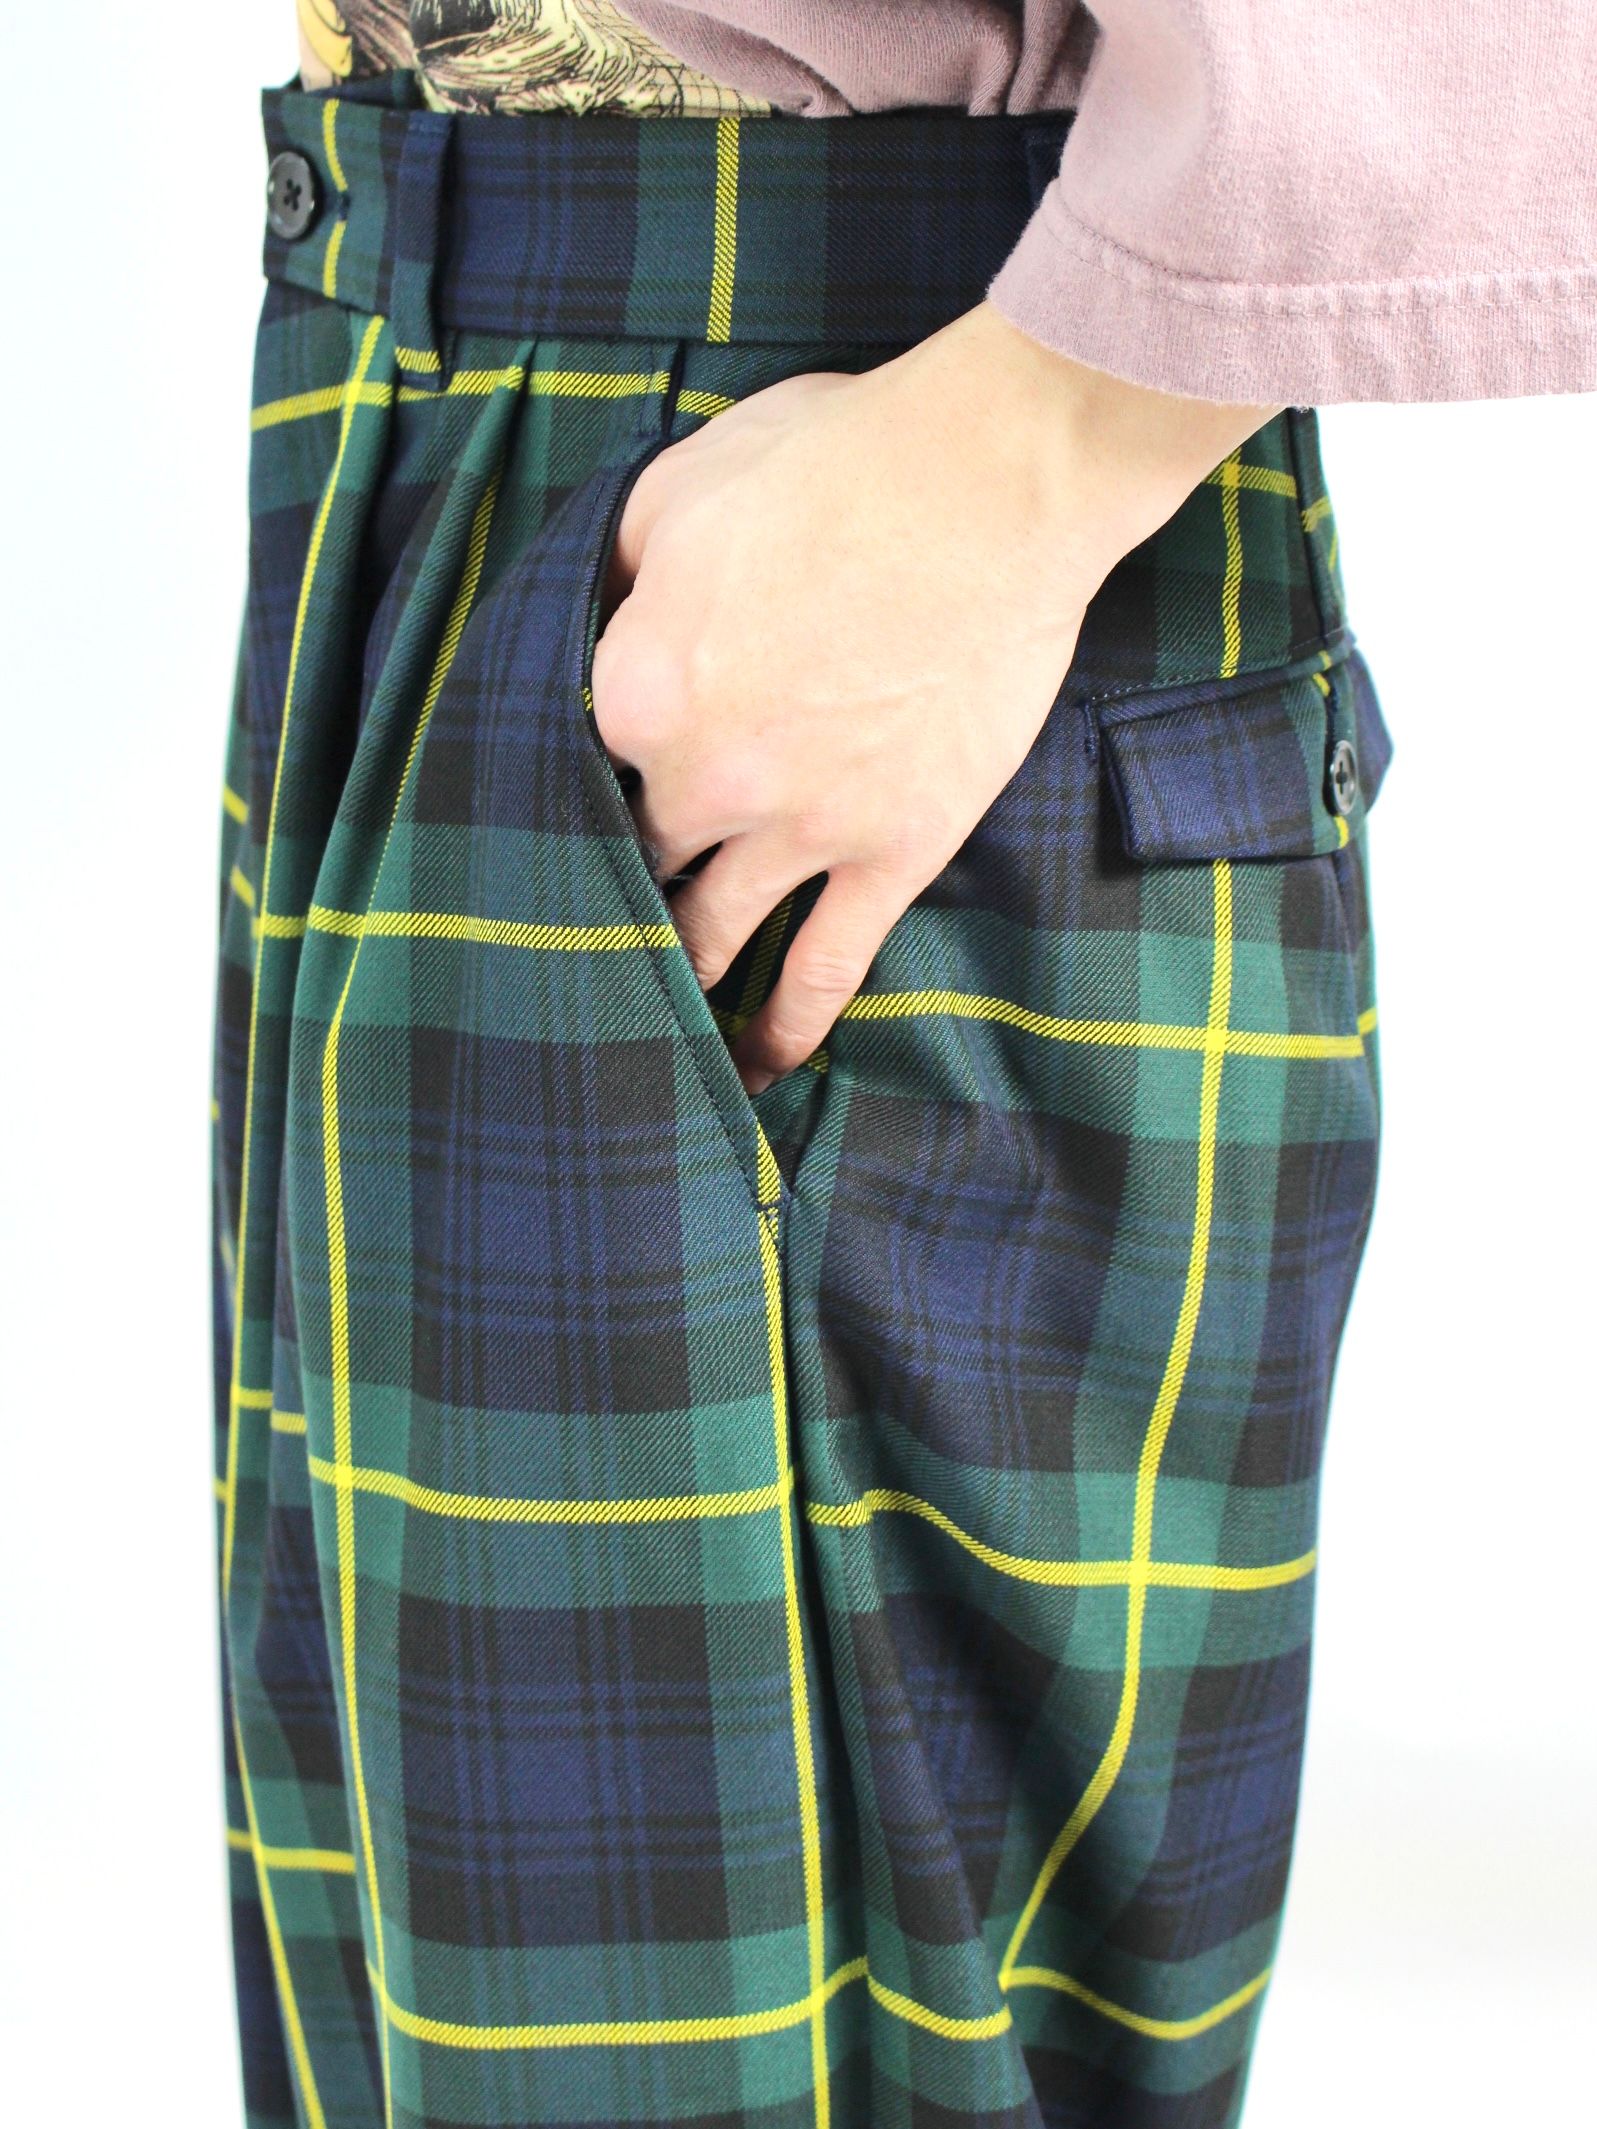 【22SS】2タック チェックワイド パンツ / Two Tuck Wide Pants / グリーン × イエロー - グリーン - 42(S)